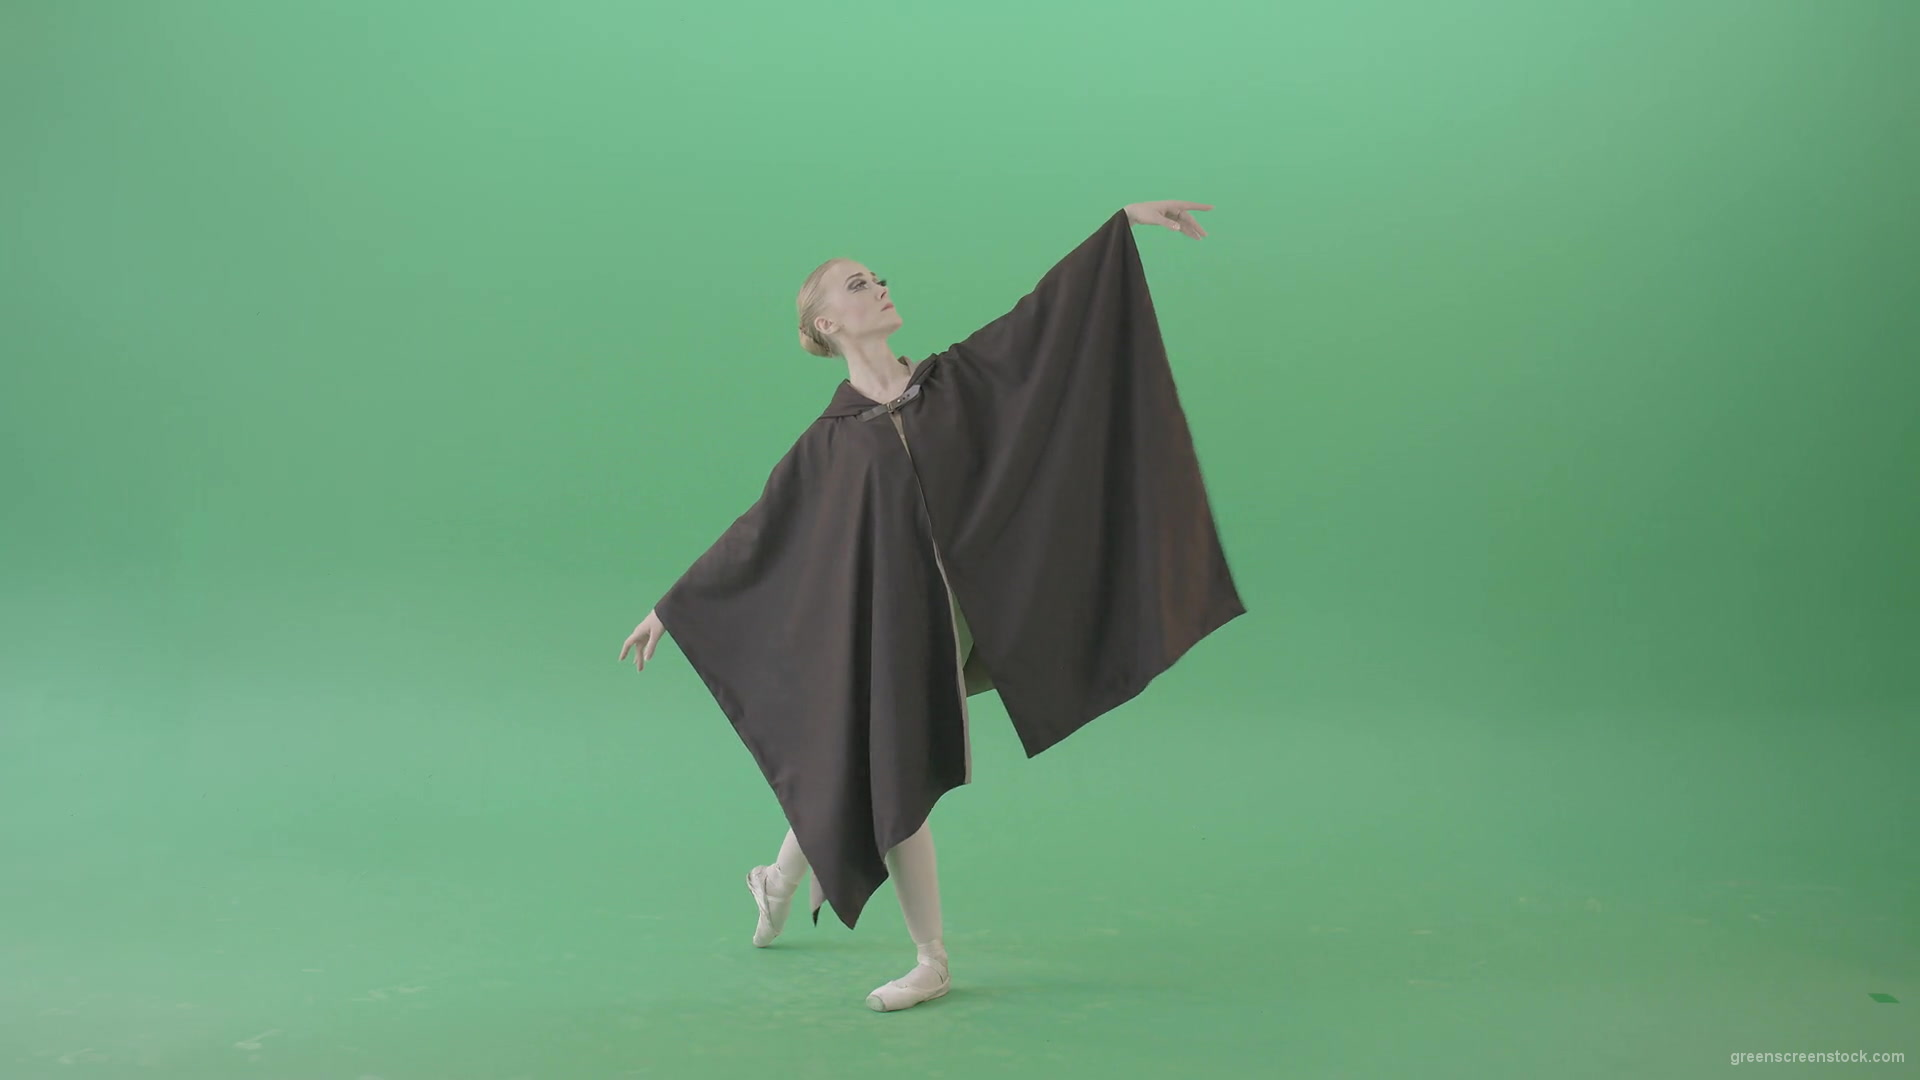 Green-Screen-Ballet-Girl-spinning-in-black-Mantle-cloak-4K-Video-Footage-1920_009 Green Screen Stock